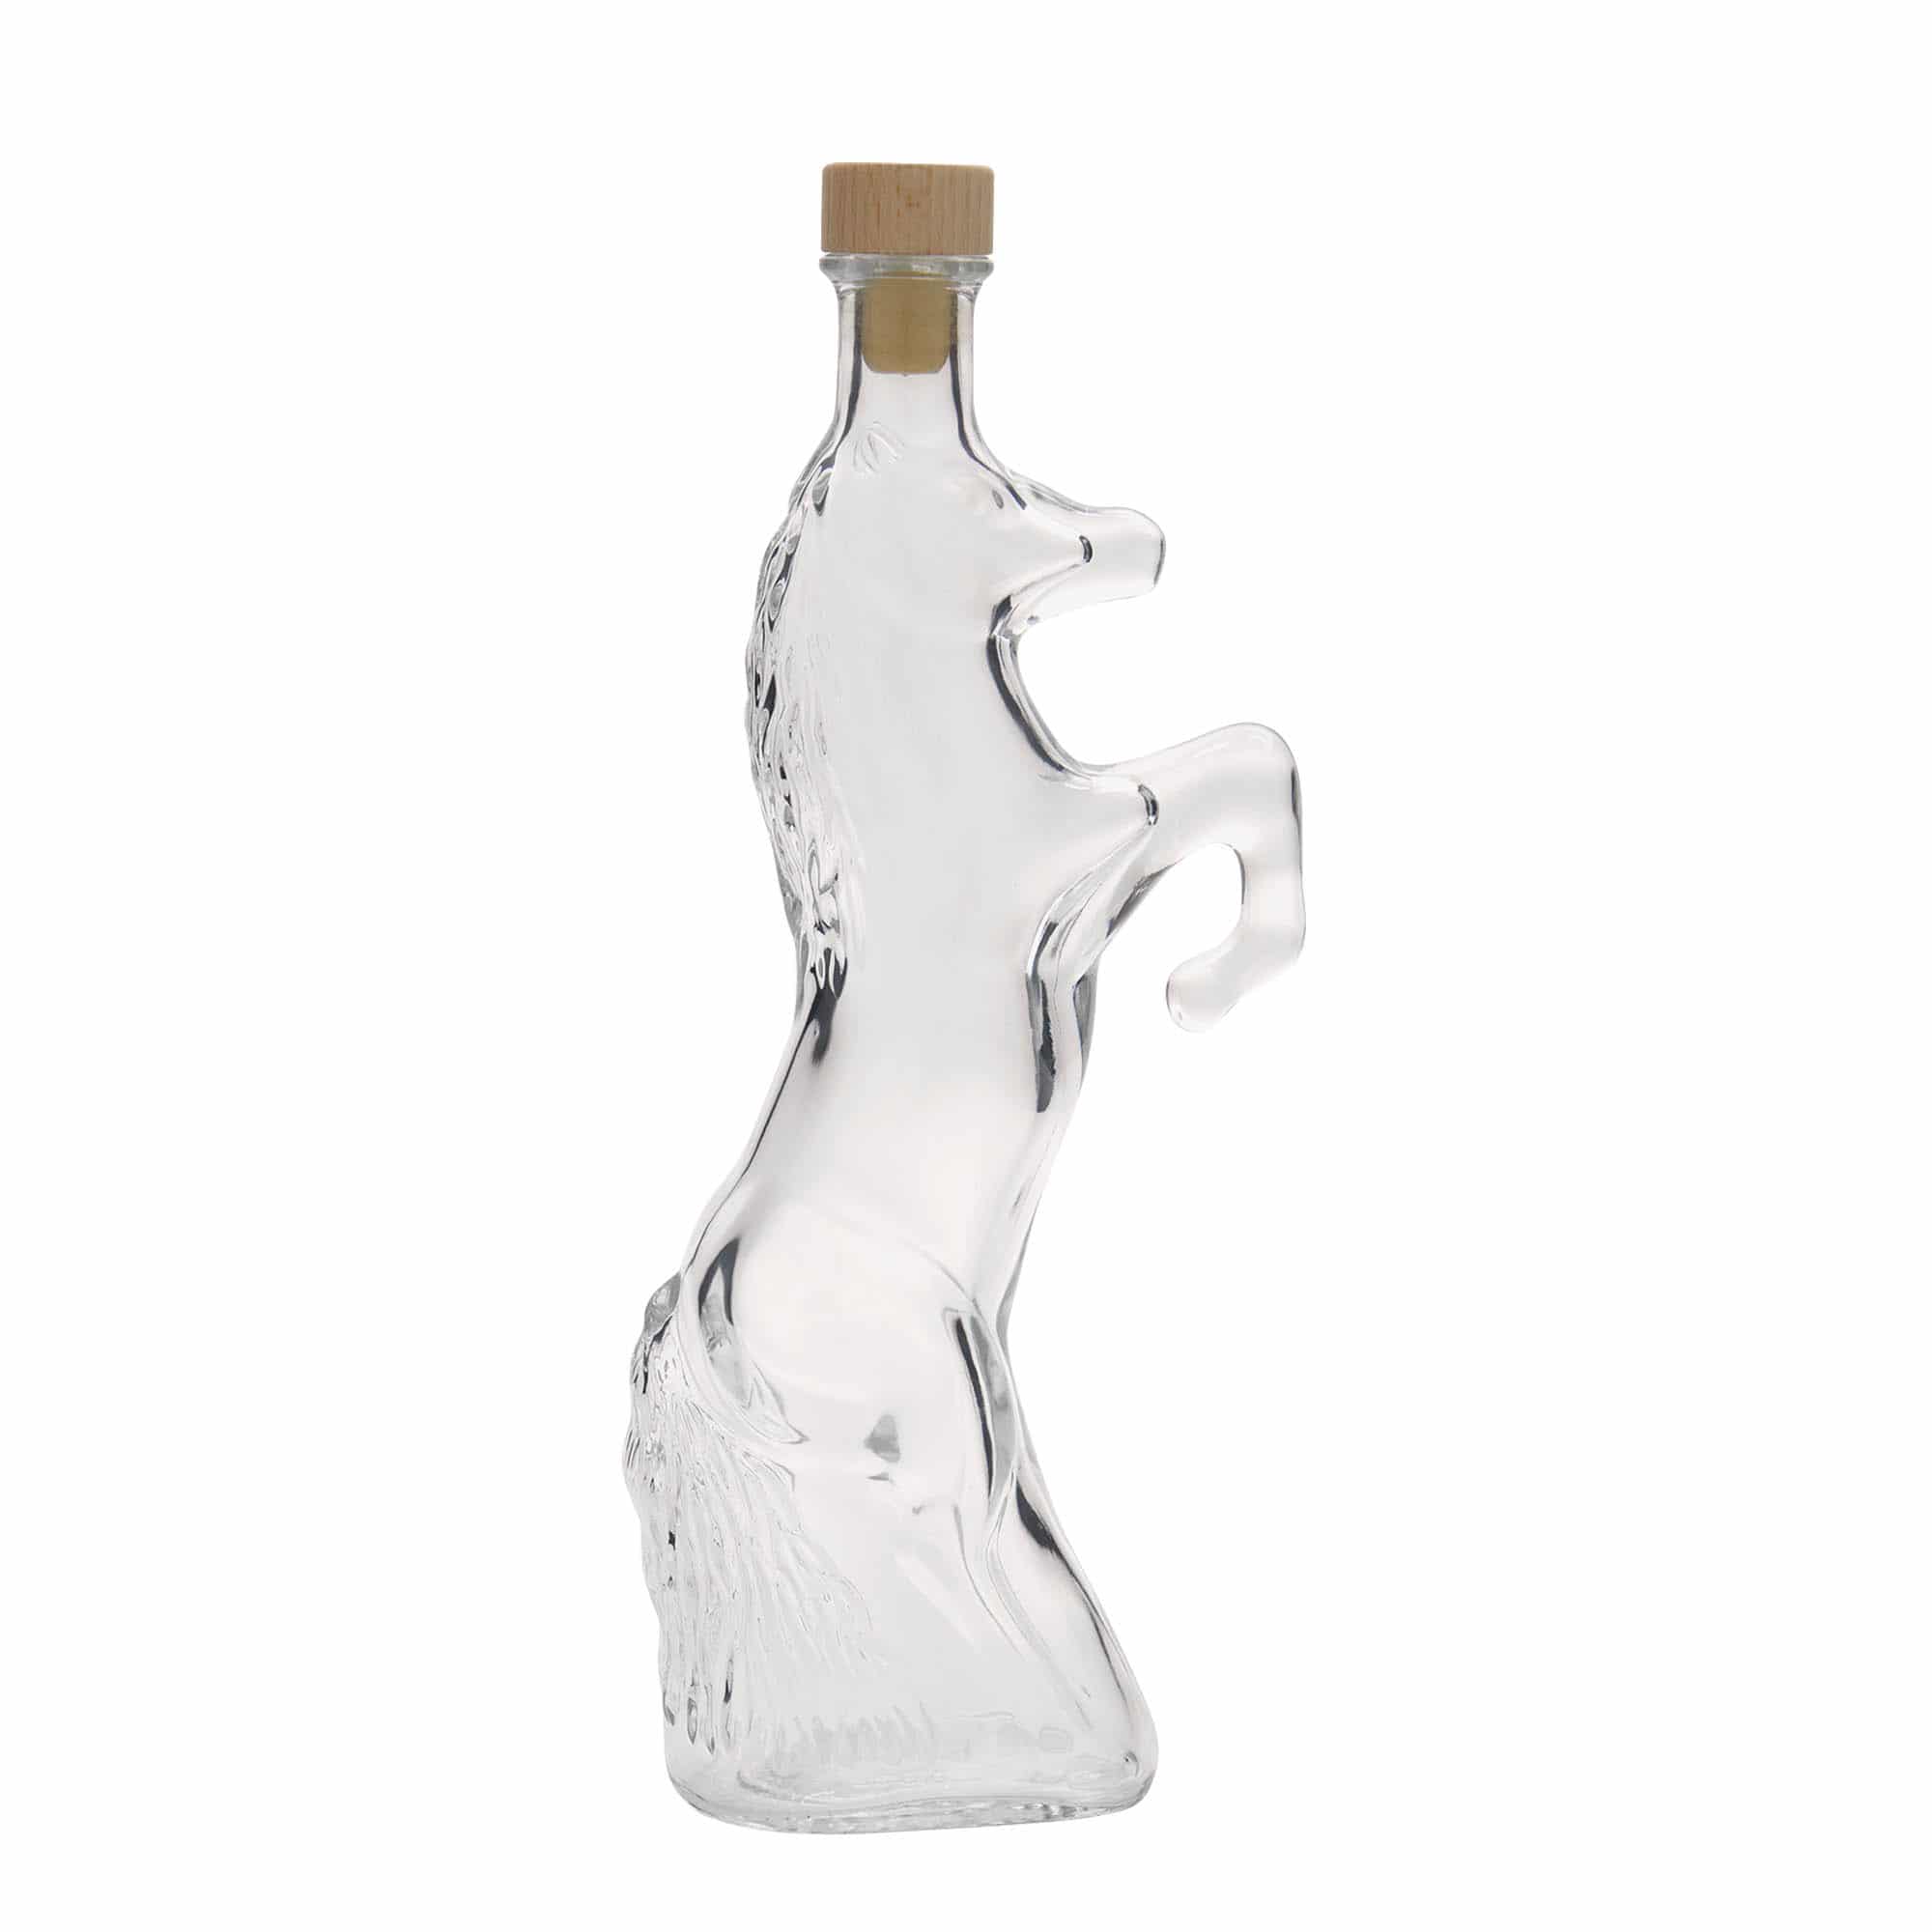 350 ml glass bottle 'Wild Horse', closure: cork